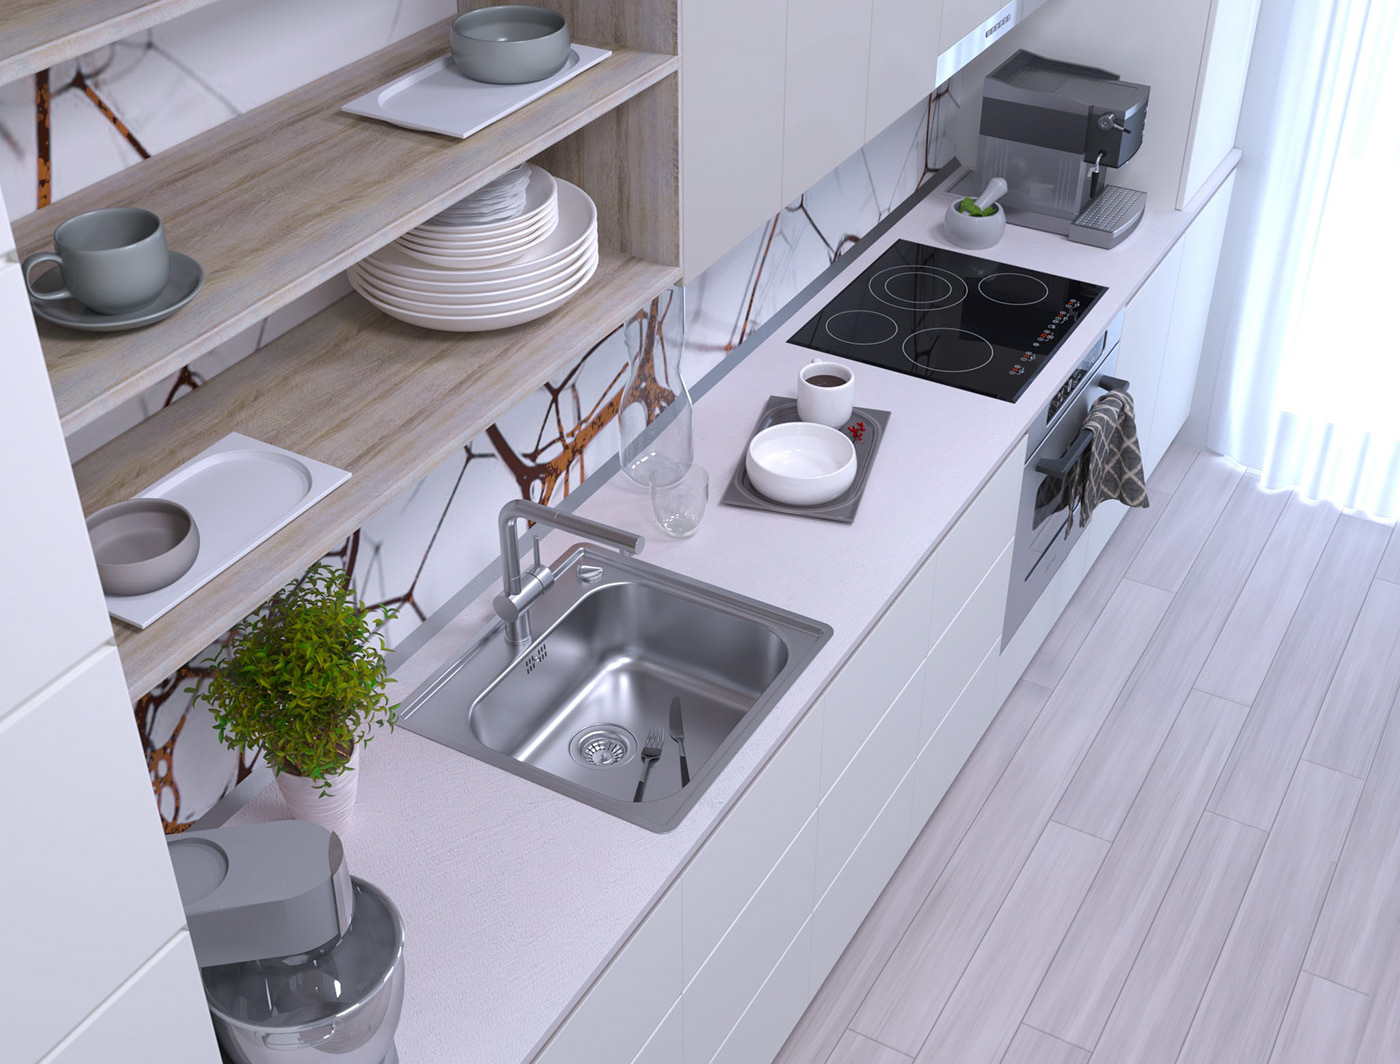 3dsmax CGI coronarenderer epoxy interiordesign kitchen lightcolors NeuralNetwork smallkitchen